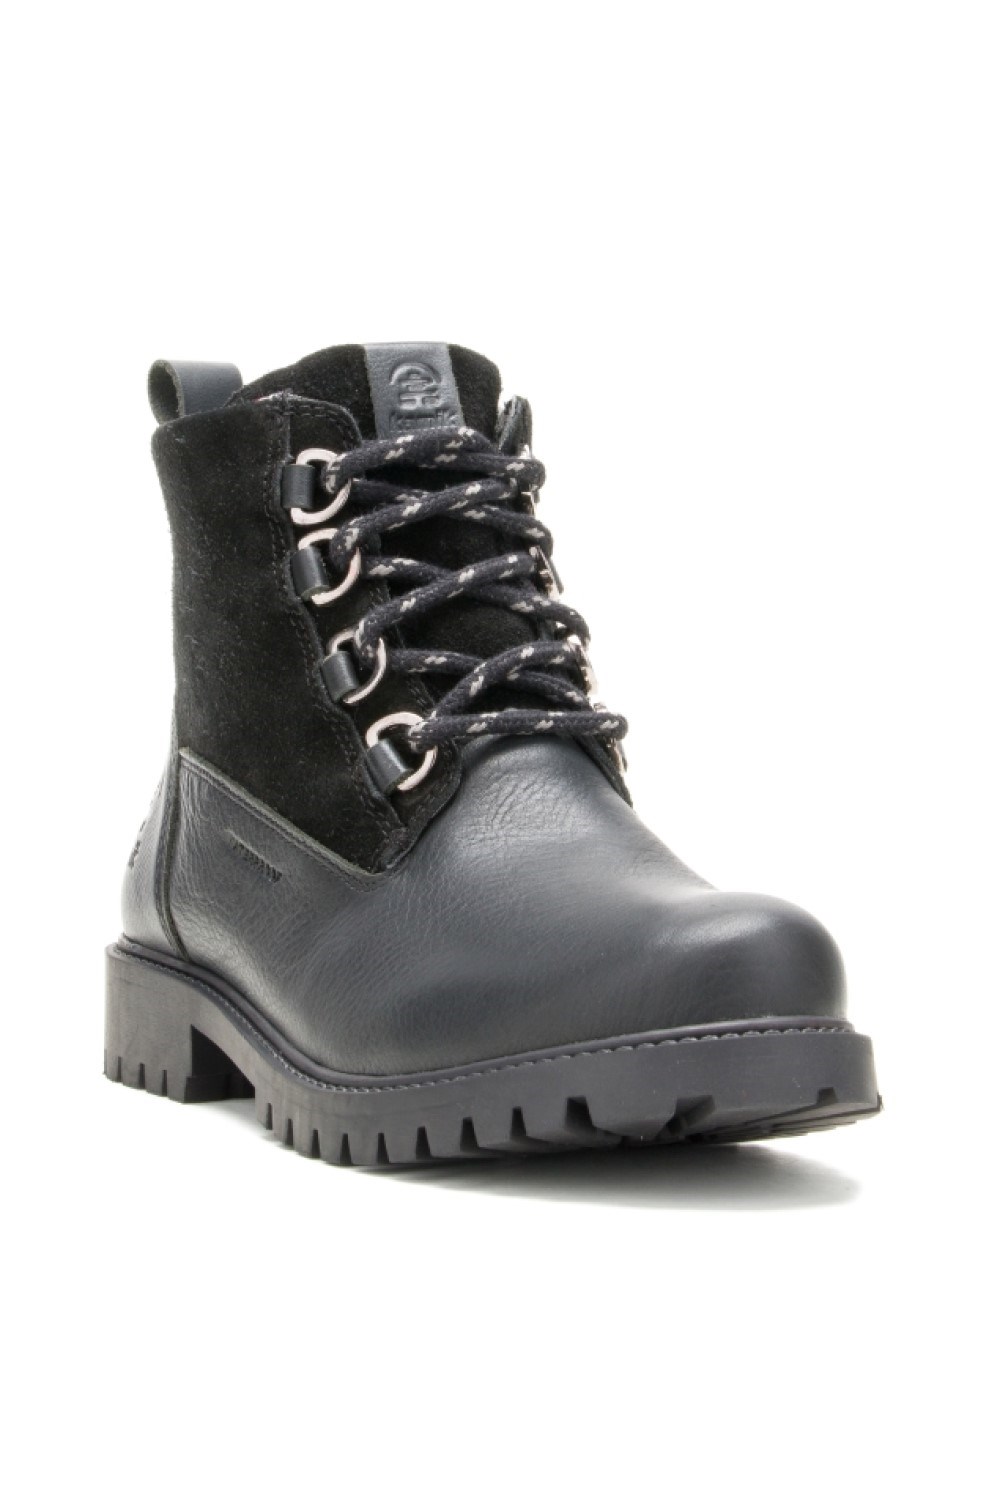 Rogue S Womens Winter Boots -